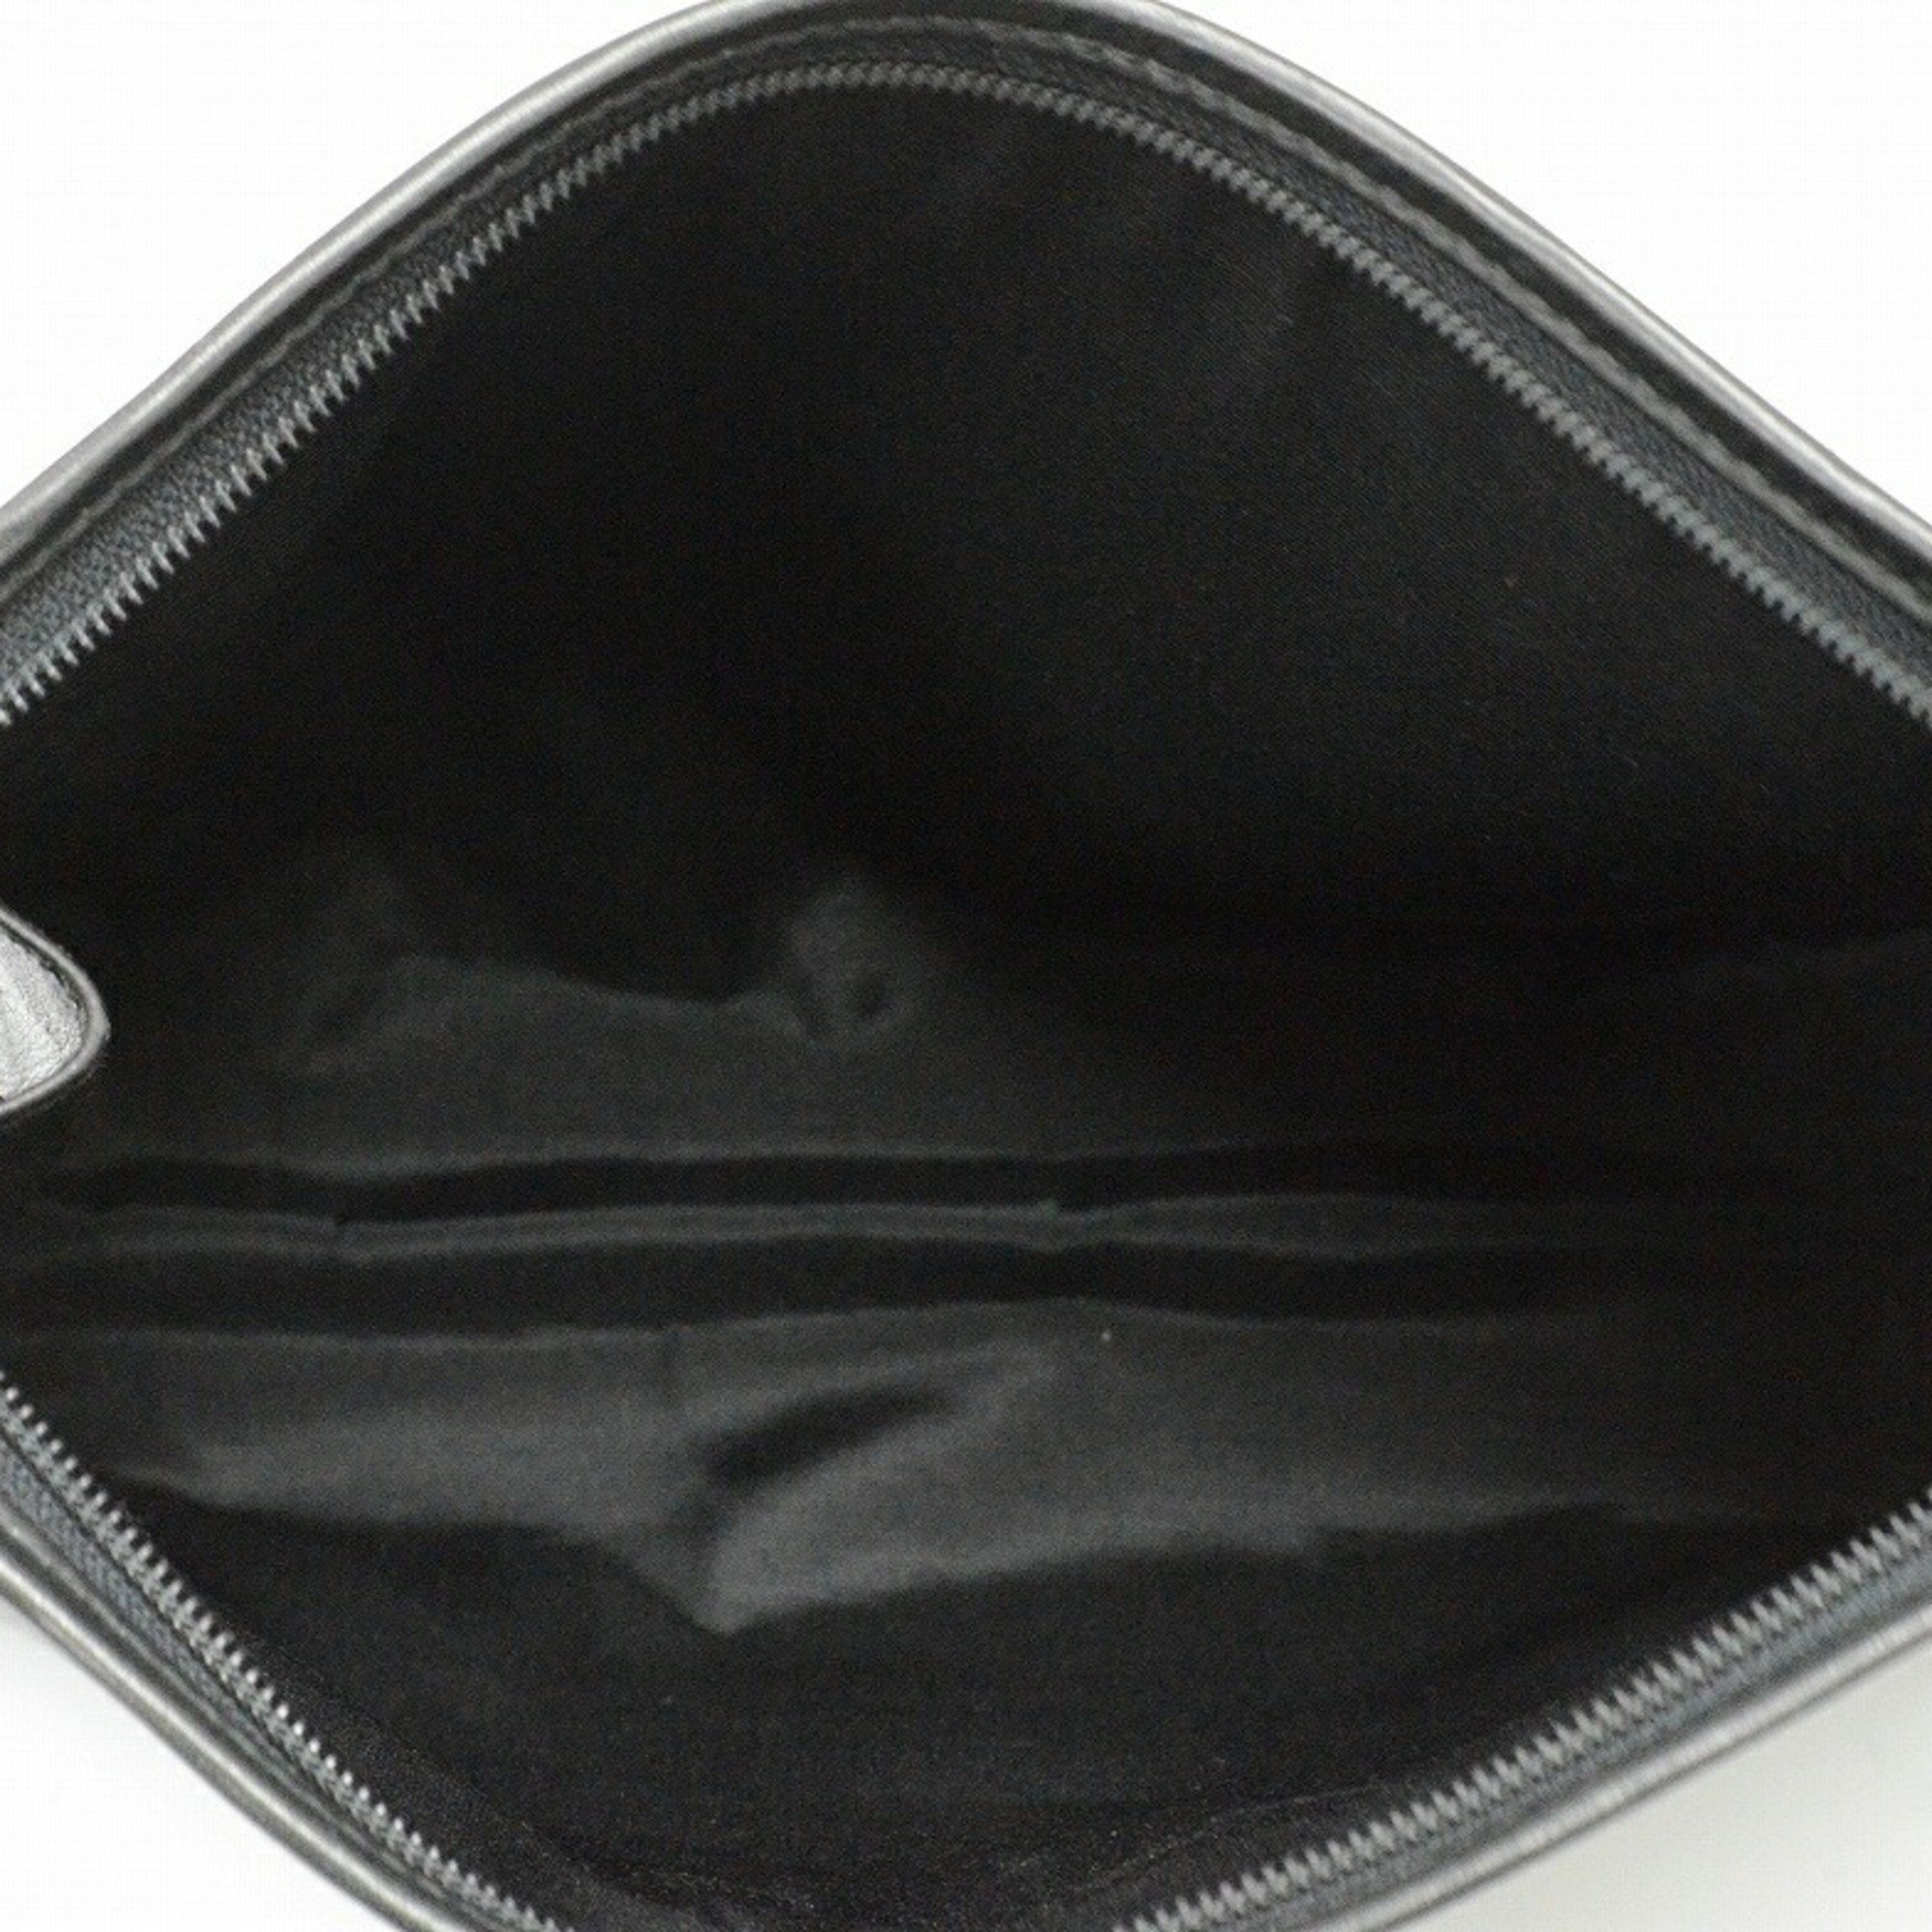 LOEWE Nappa Leather Pouch Clutch Bag JA-18778